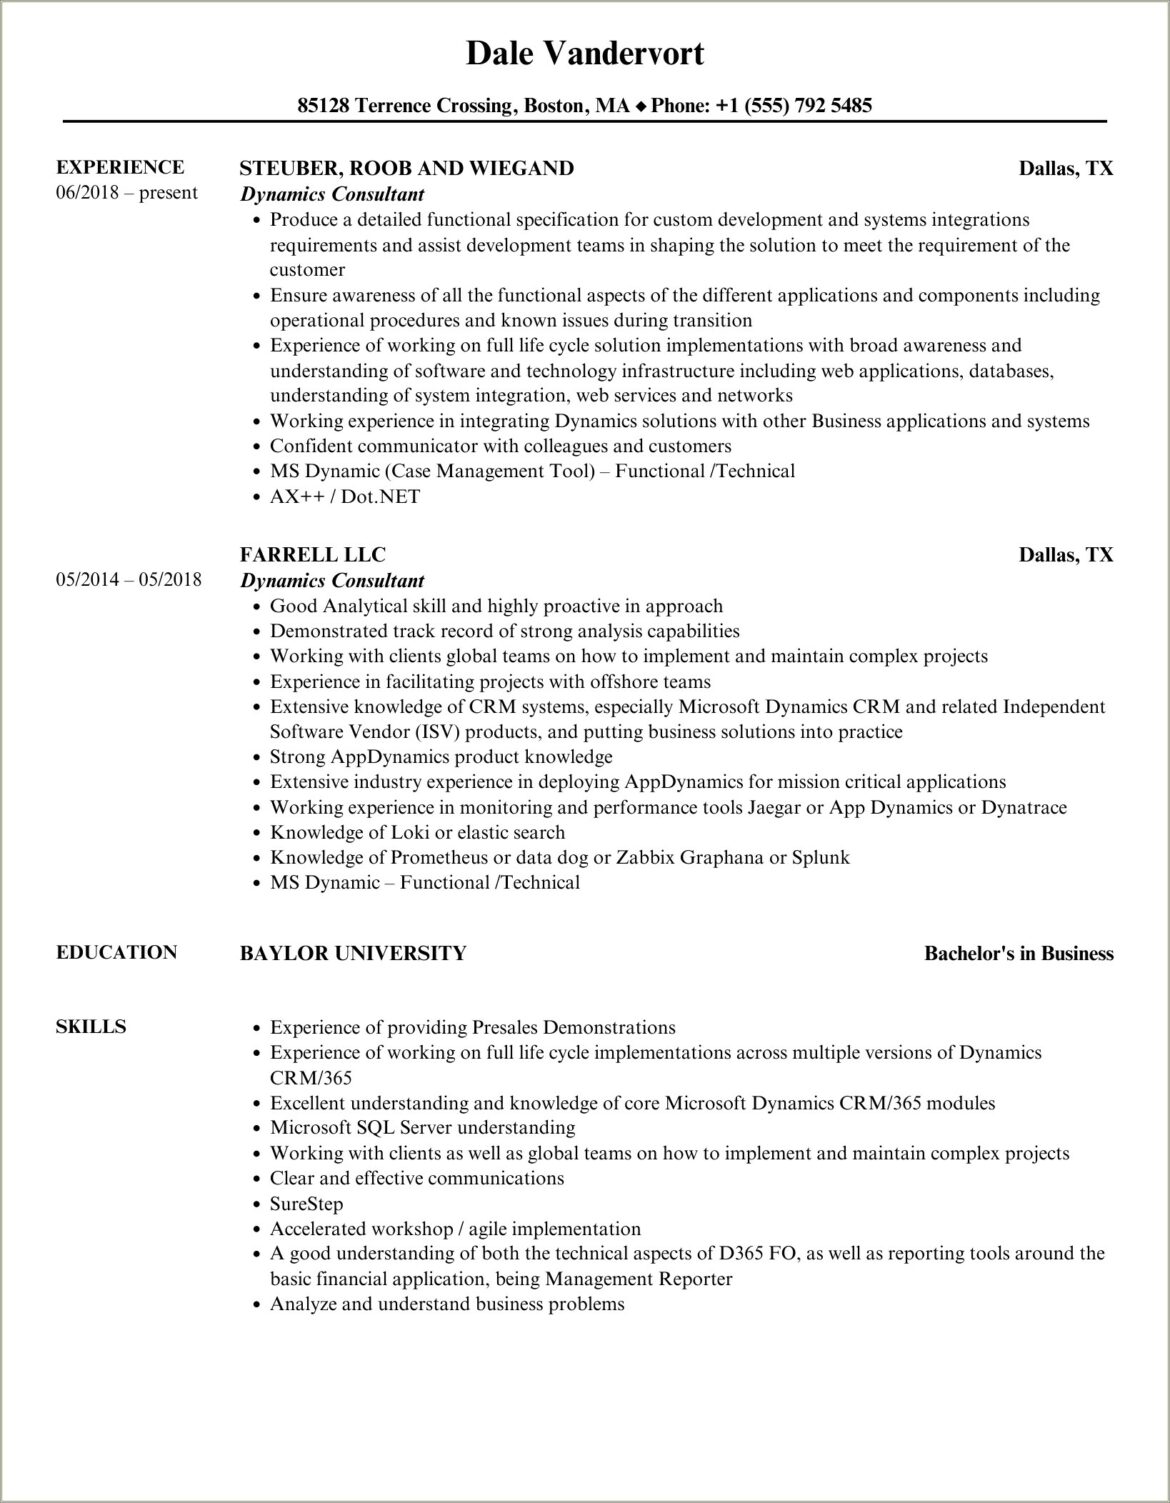 Sample Resume For Microsoft Dynamics Crm